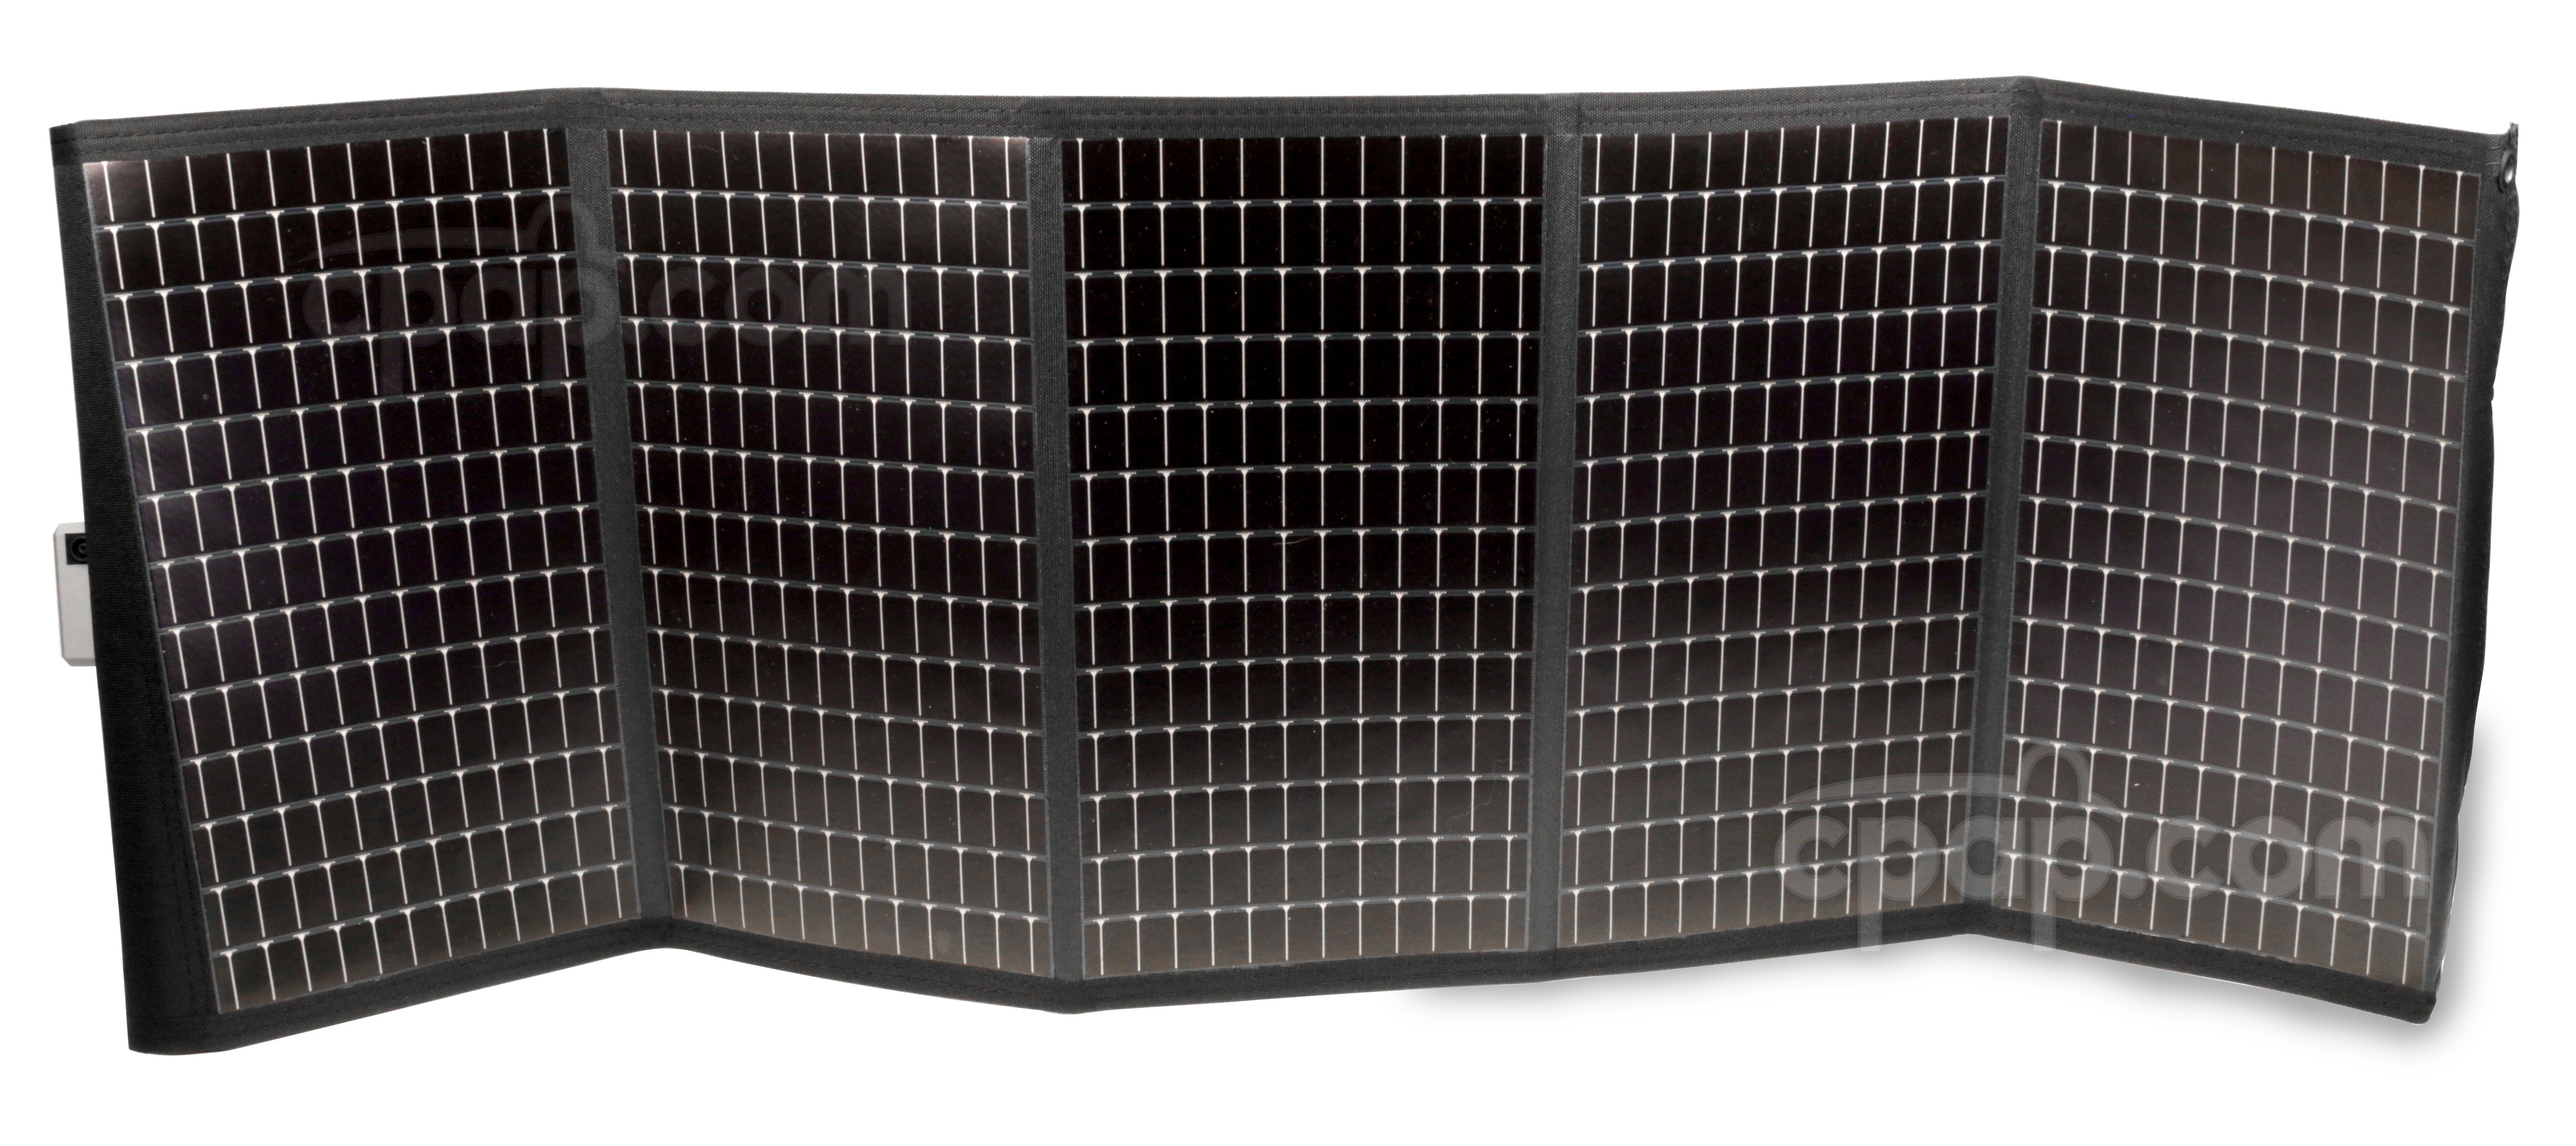 Solar Charger for Transcend Batteries - Unfolded